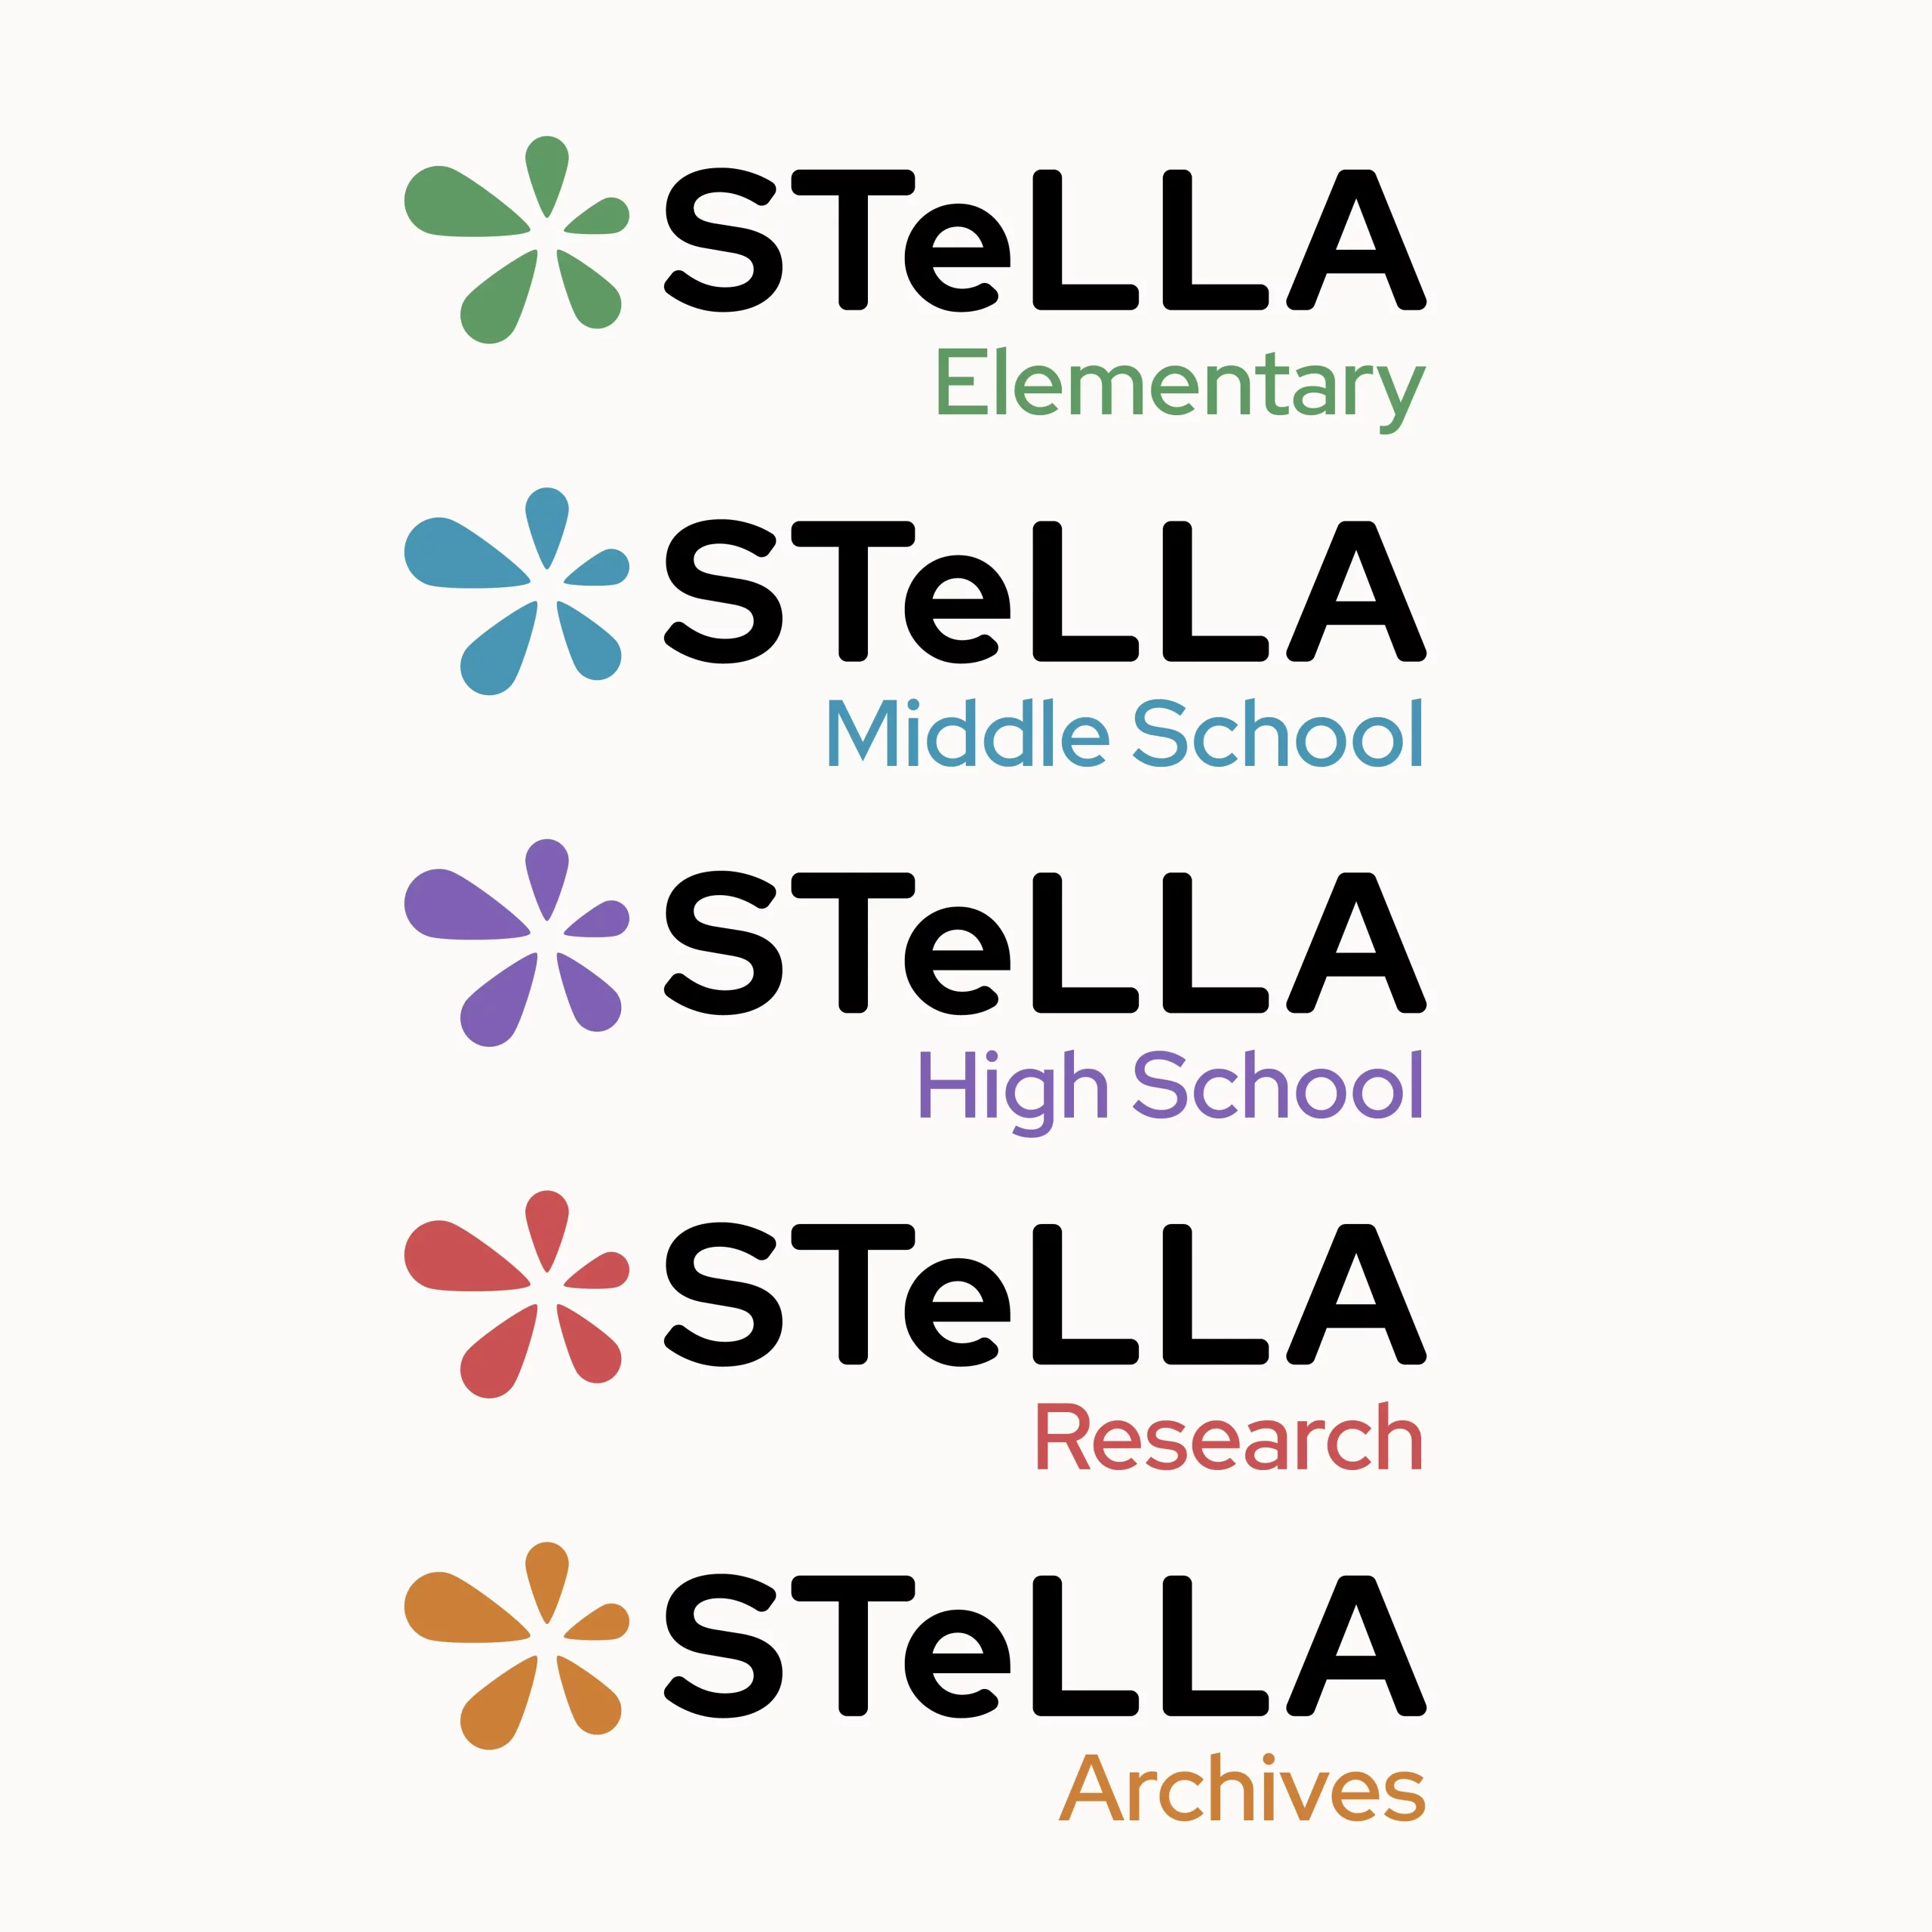 stella sub brand logos kate chambers creative